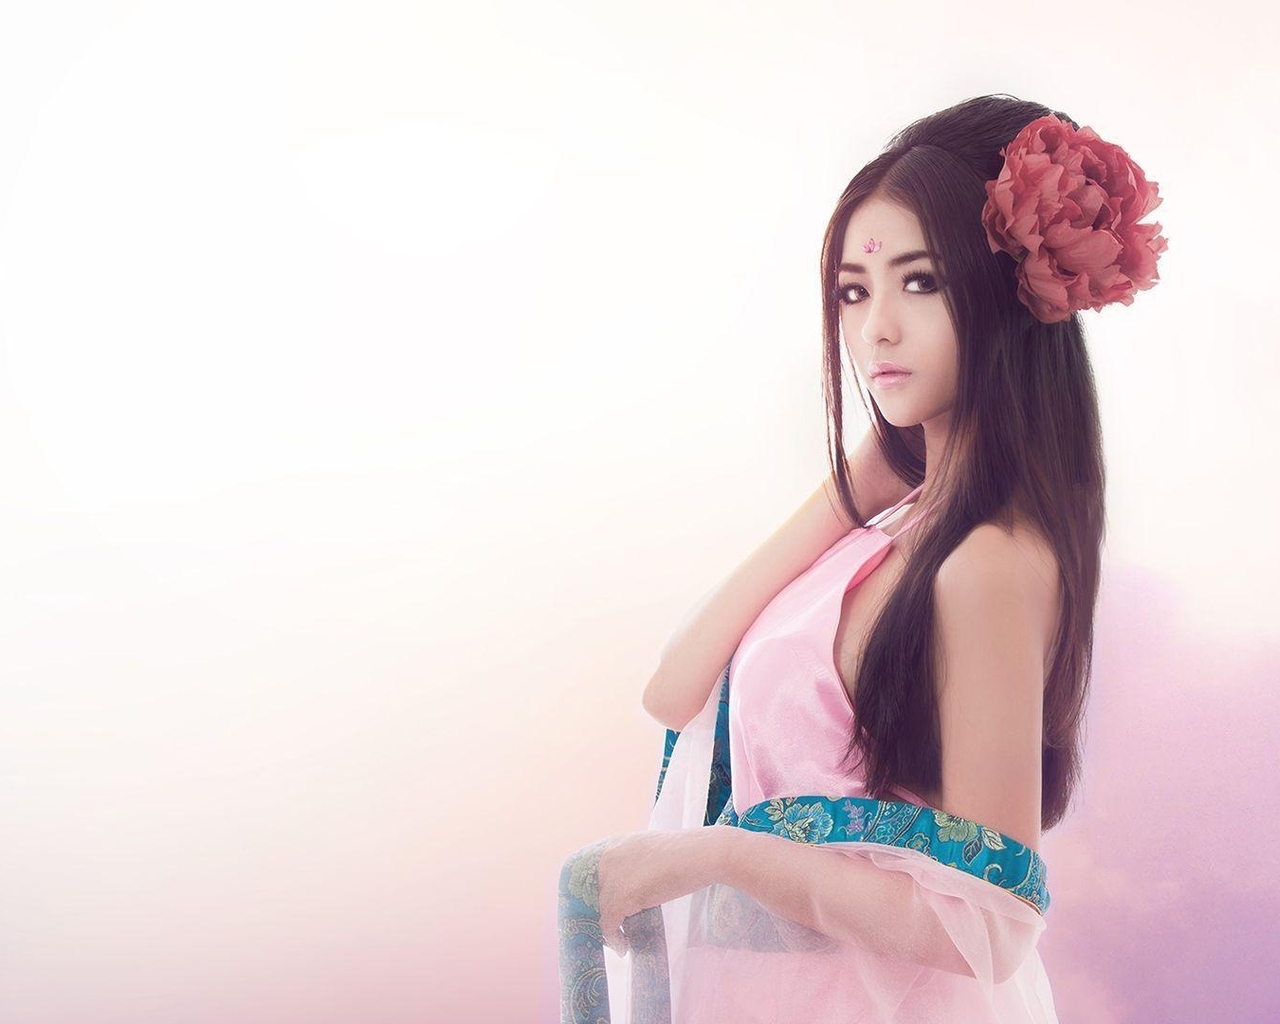 Image: Girl, superb, hair, flower, beautiful background